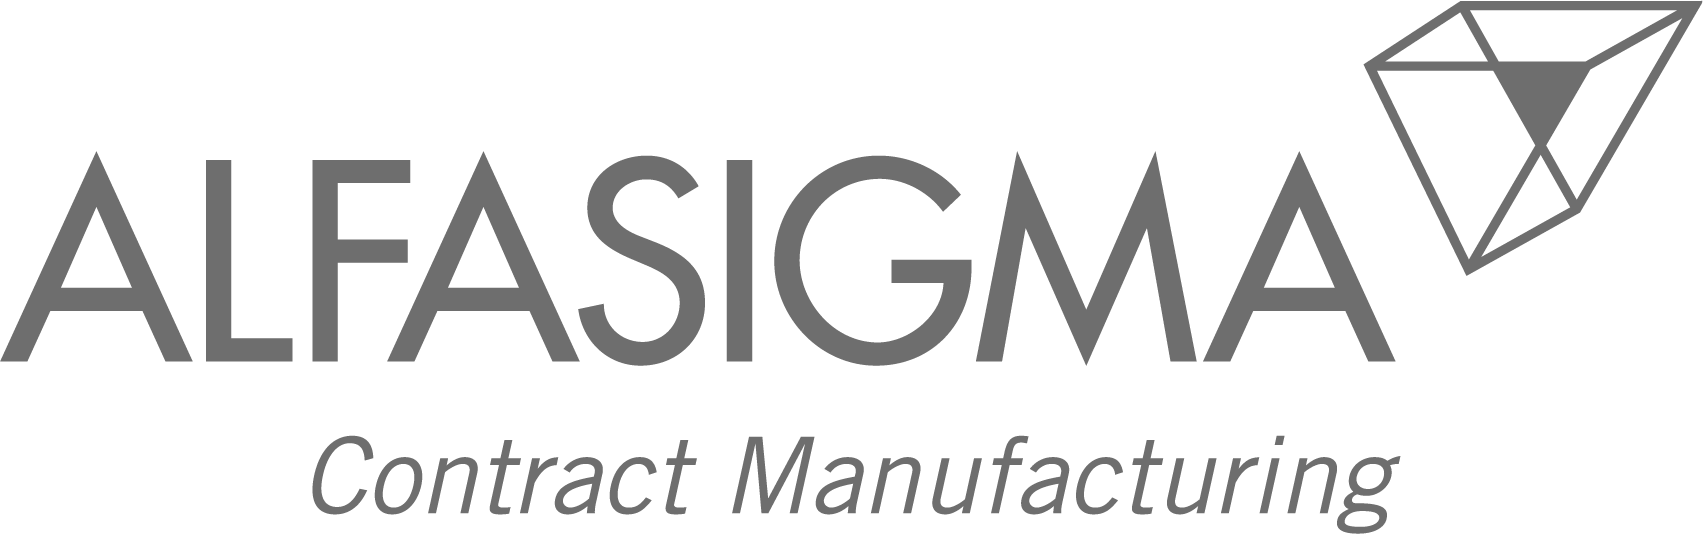 Alfasigma Contract Manufacturing S.p.A.